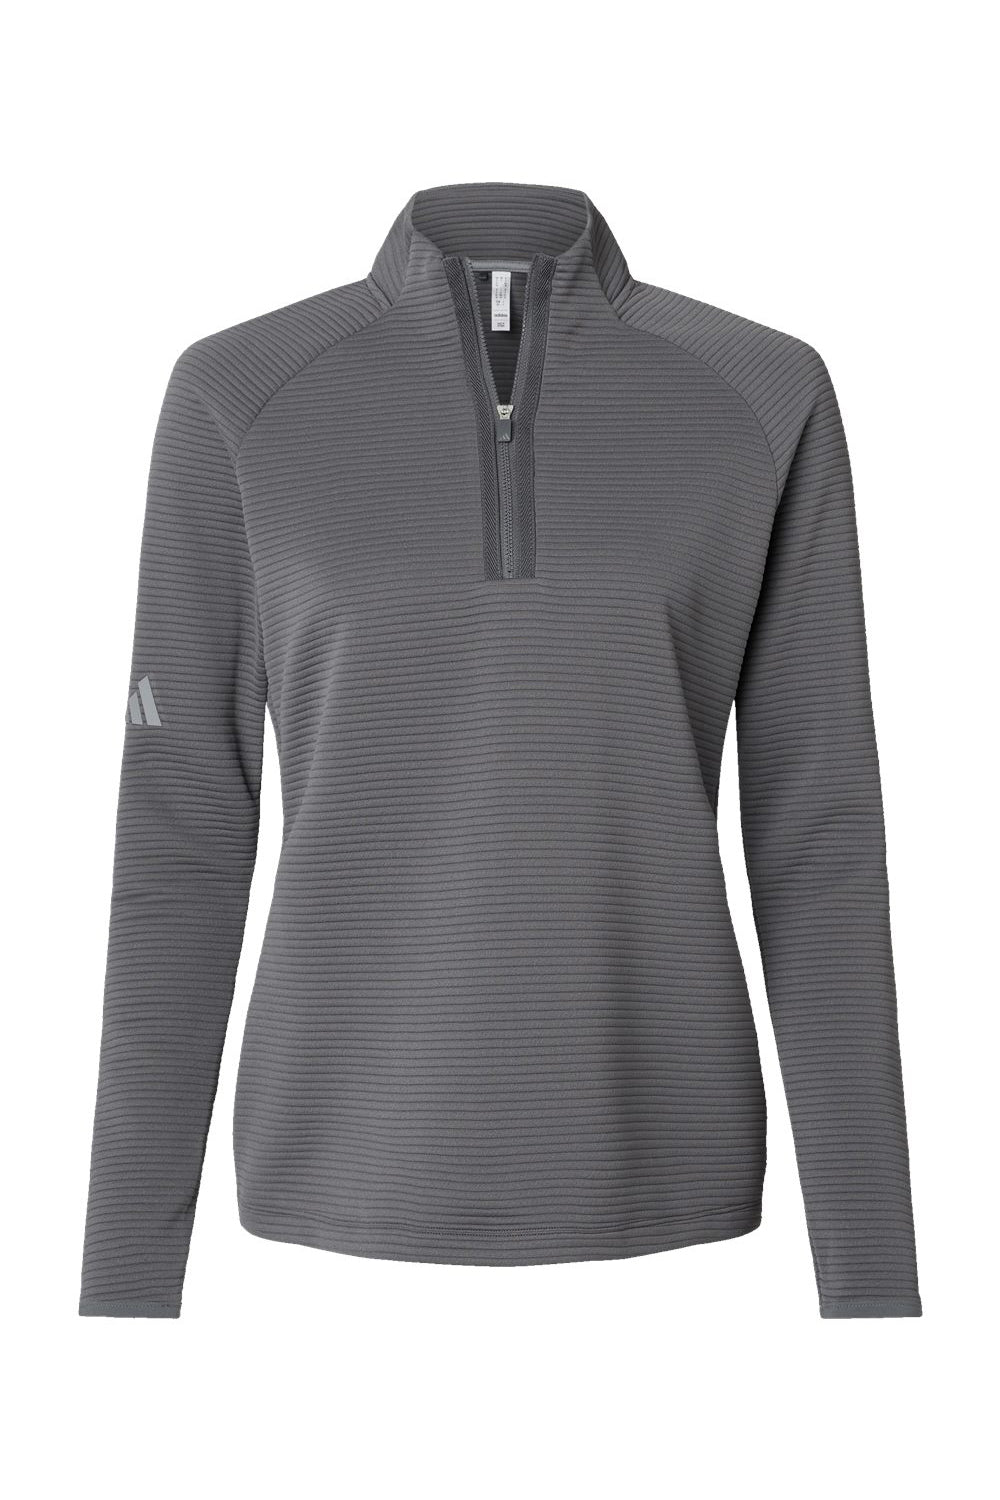 Adidas A589 Womens Spacer 1/4 Zip Sweatshirt Grey Flat Front